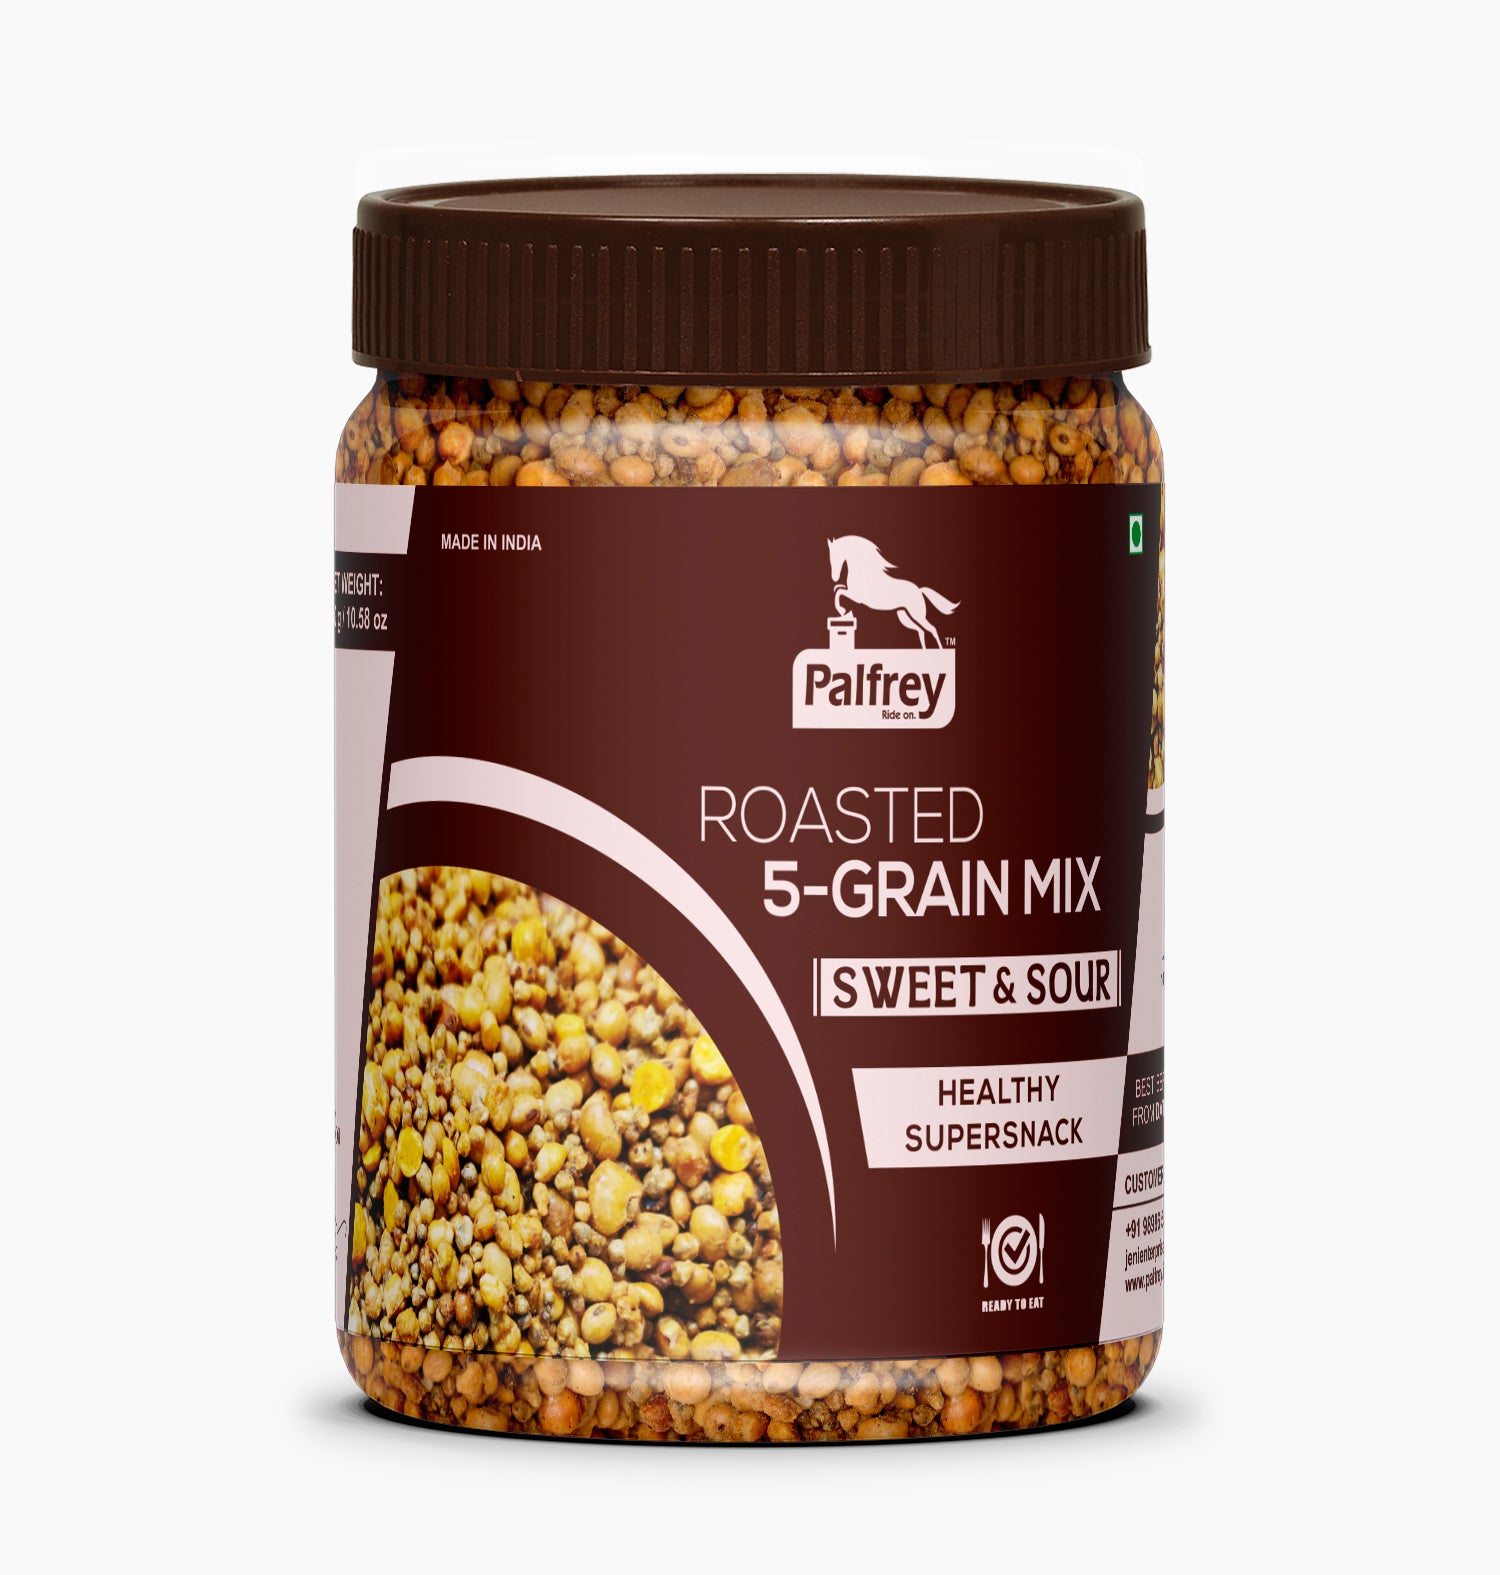 Palfrey Roasted 5-Grain Mix Sweet & Sour 300g